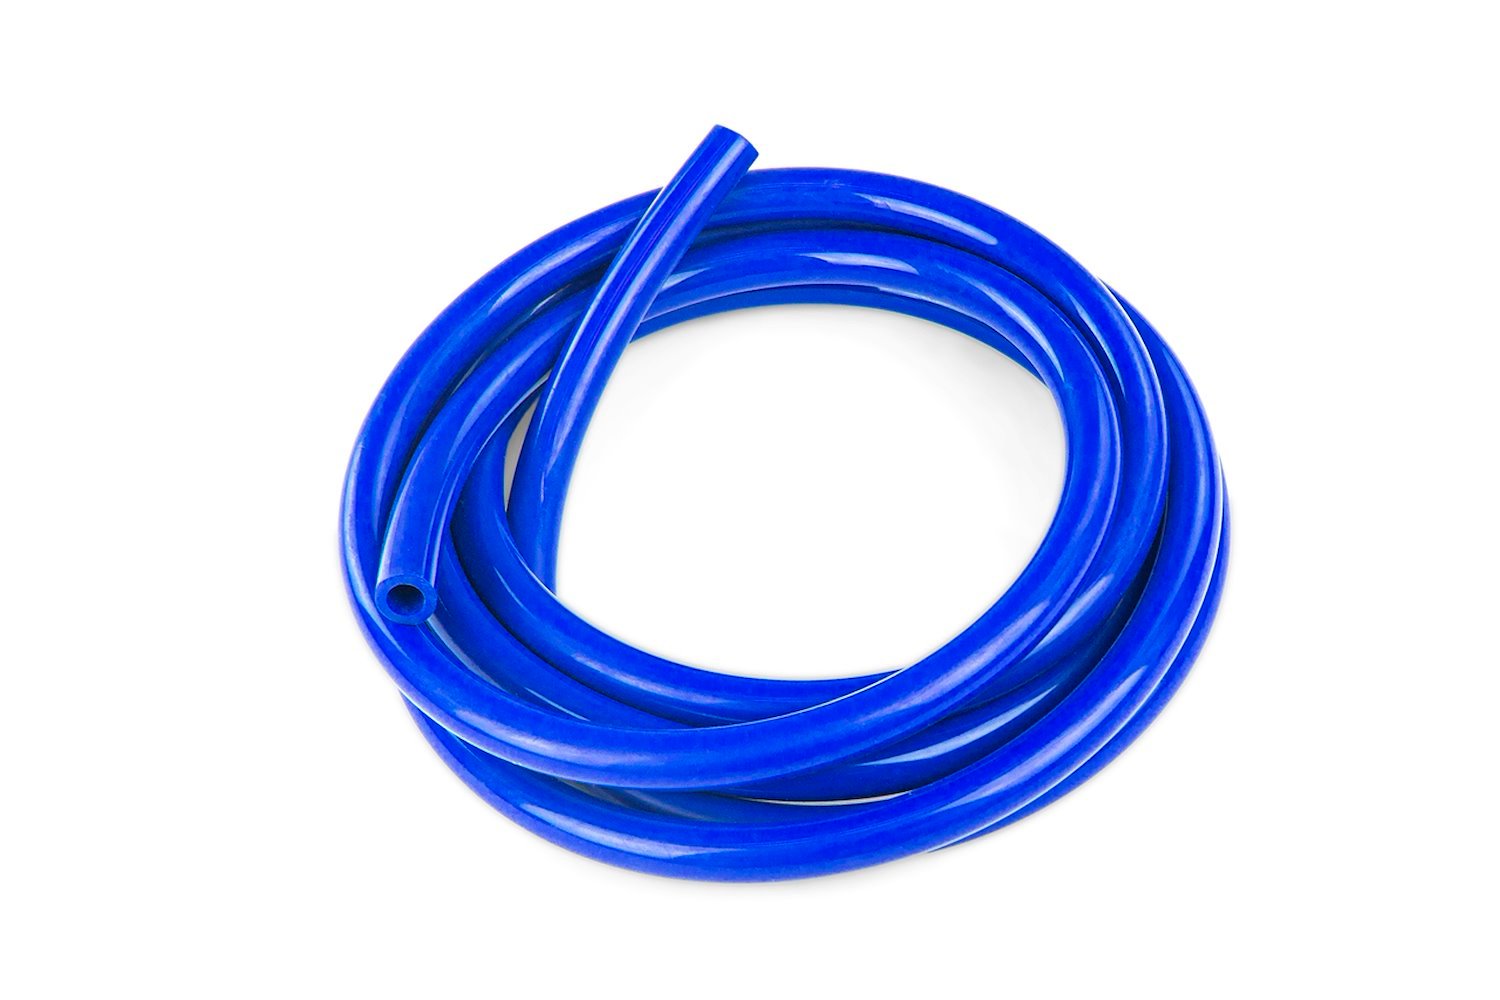 HTSVH5-BLUEx25 High-Temperature Silicone Vacuum Hose Tubing, 13/64 in. ID, 25 ft. Roll, Blue